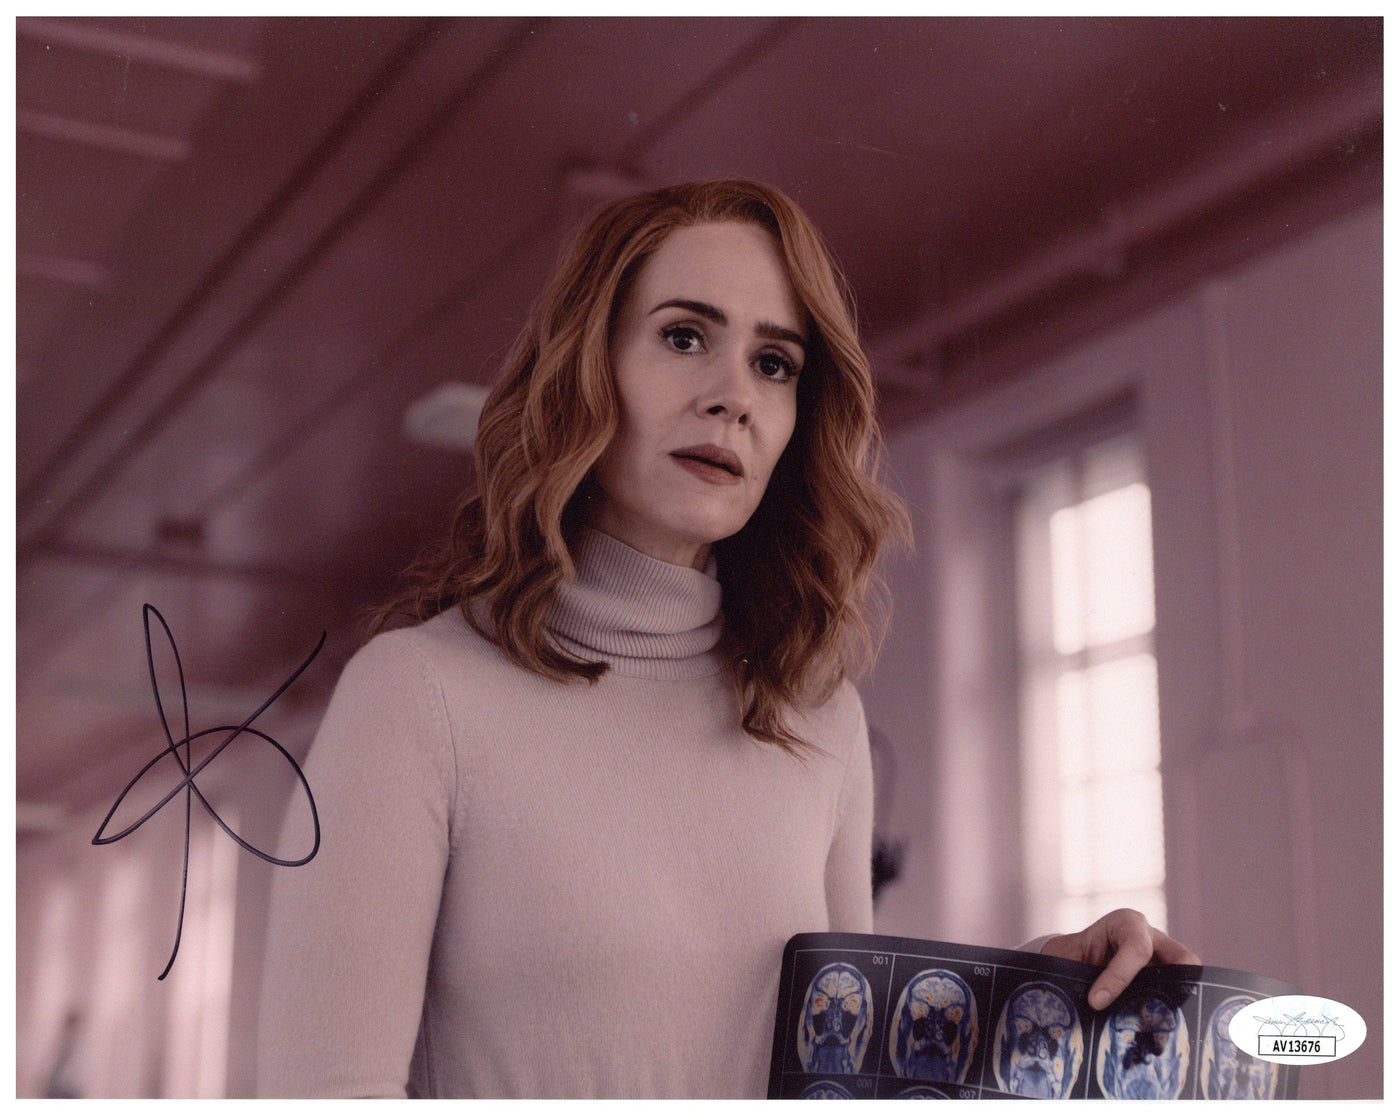 Sarah Paulson Signed 8x10 Photo Authentic American Horror Story Autographed JSA COA